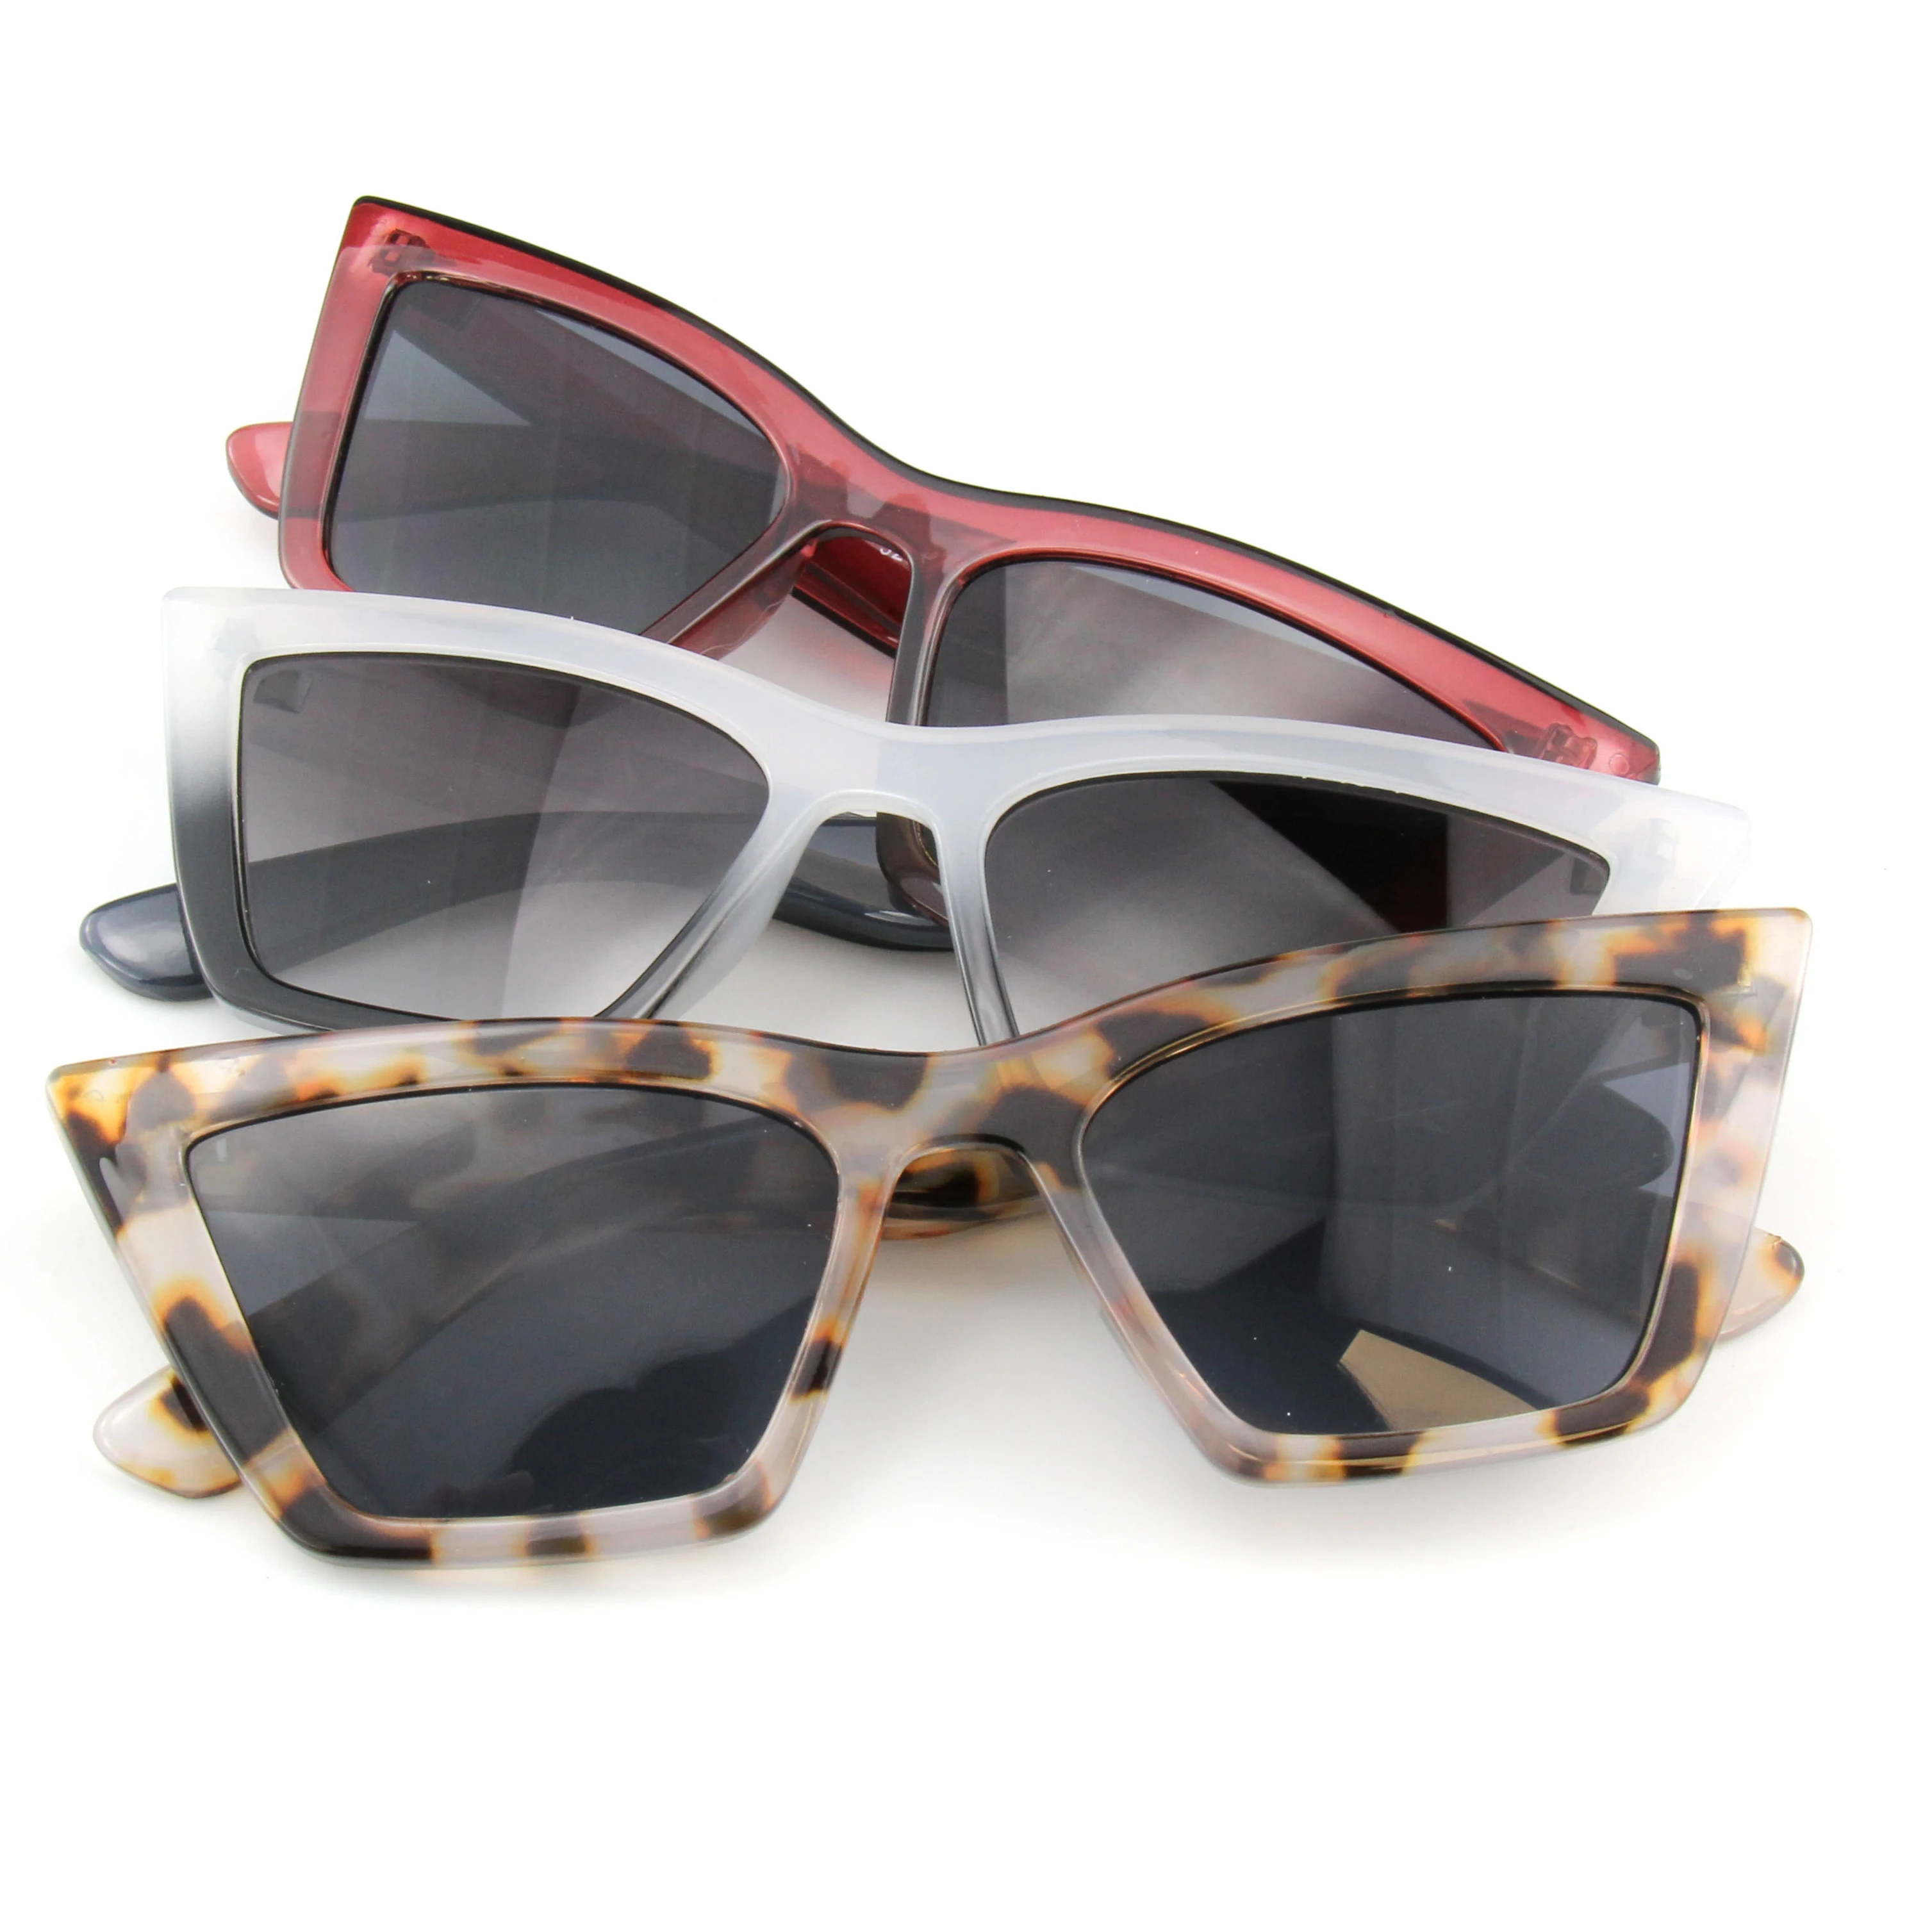 EUGENIA fashion shades cateye sun glasses luxury newest biodegradable mazzucchelli sunglasses